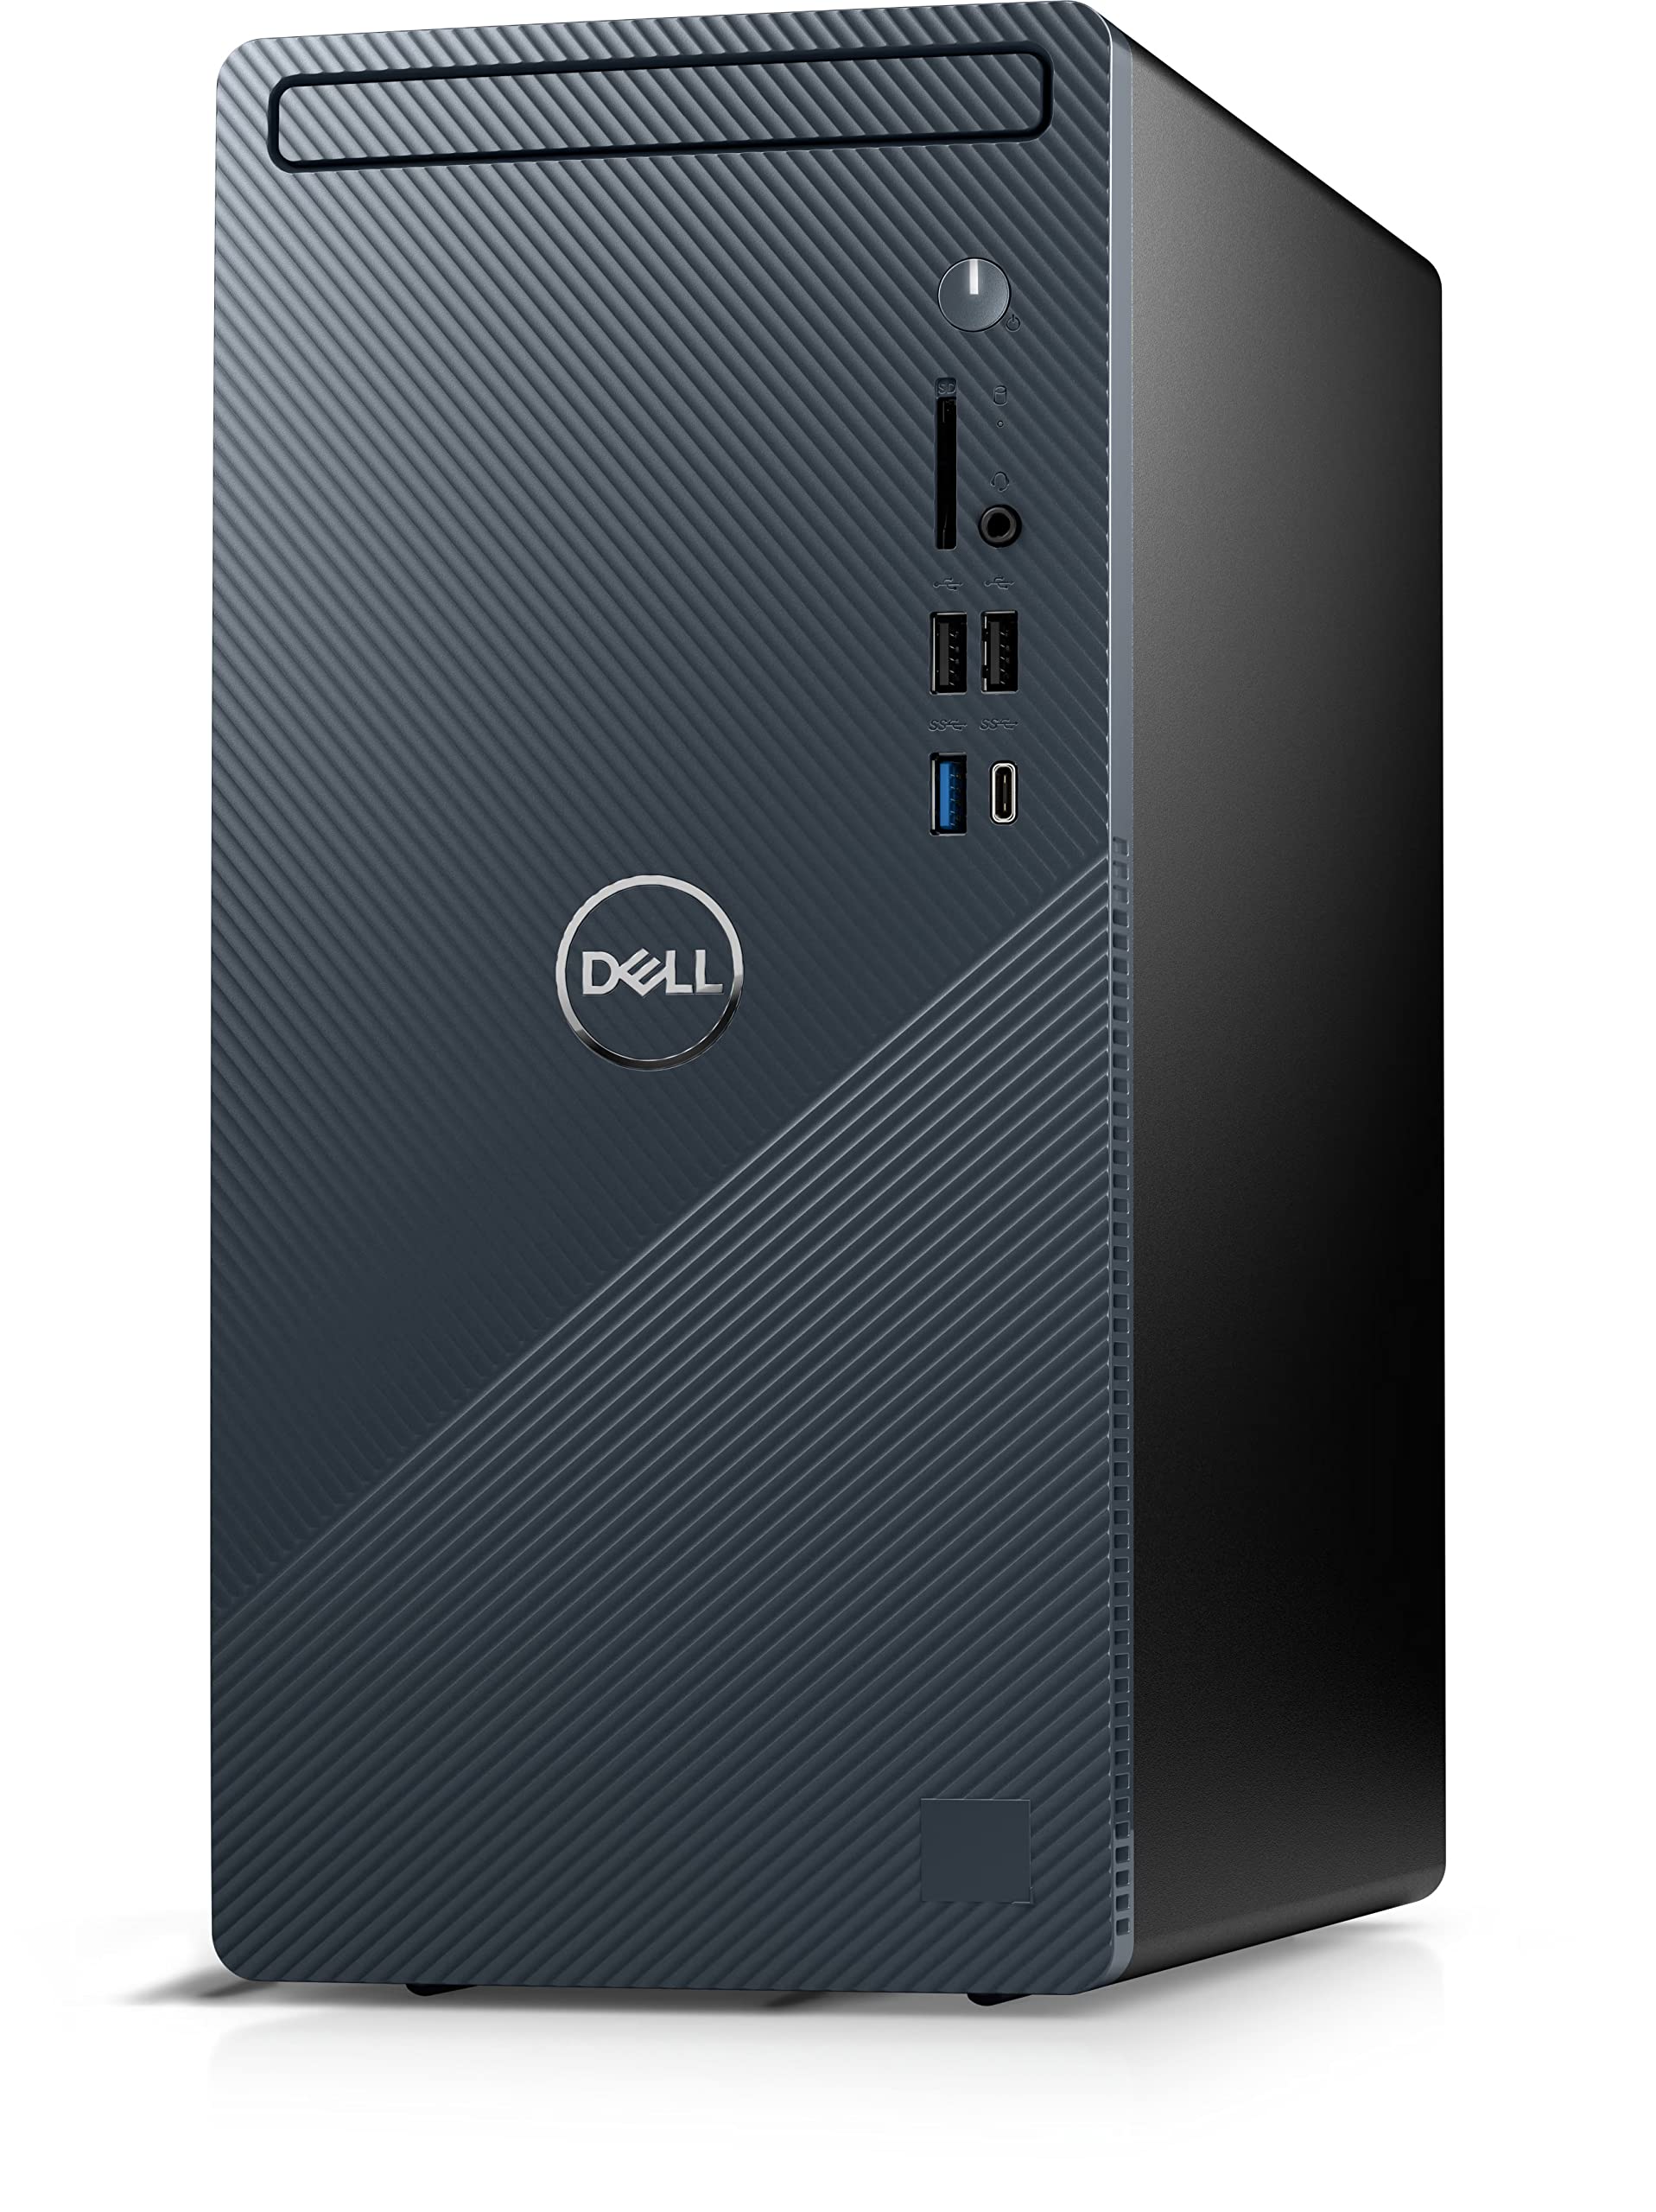 Dell Inspiron 3020 Tower Desktop Computer - 13th Gen Intel Core i5-13400 10-Core up to 4.60 GHz Processor, 16GB DDR4 RAM, 2TB NVMe SSD + 1TB HDD, Intel UHD Graphics 730, DVD+RW, Windows 11 Home